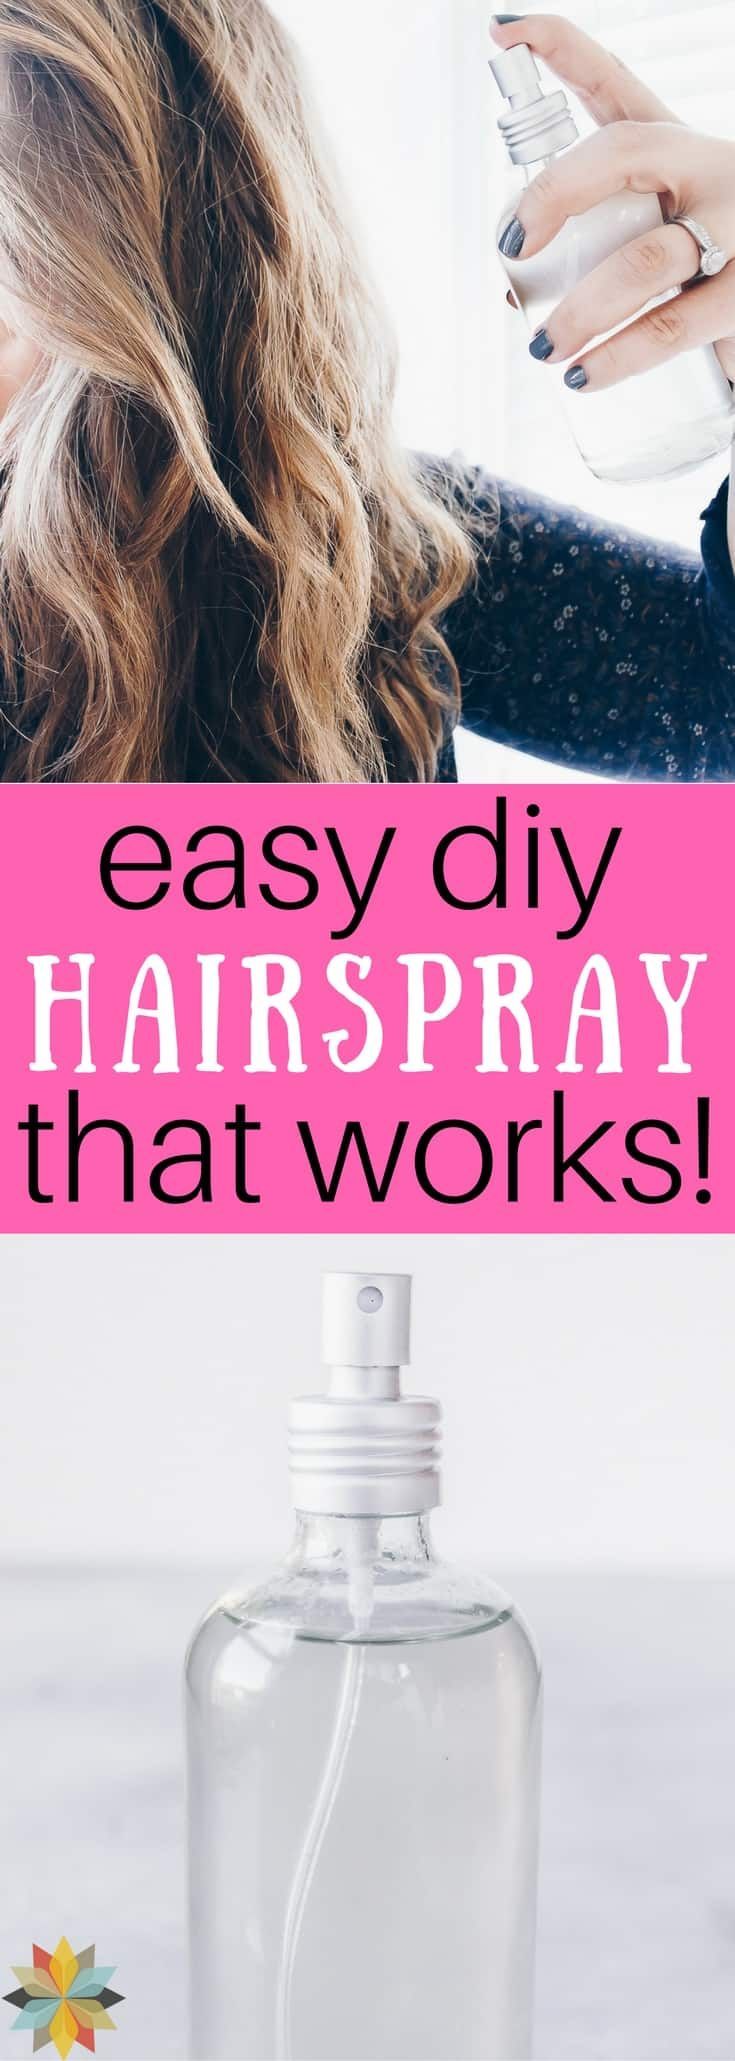 Easy DIY Hairspray that works! -   14 hair Care homemade ideas